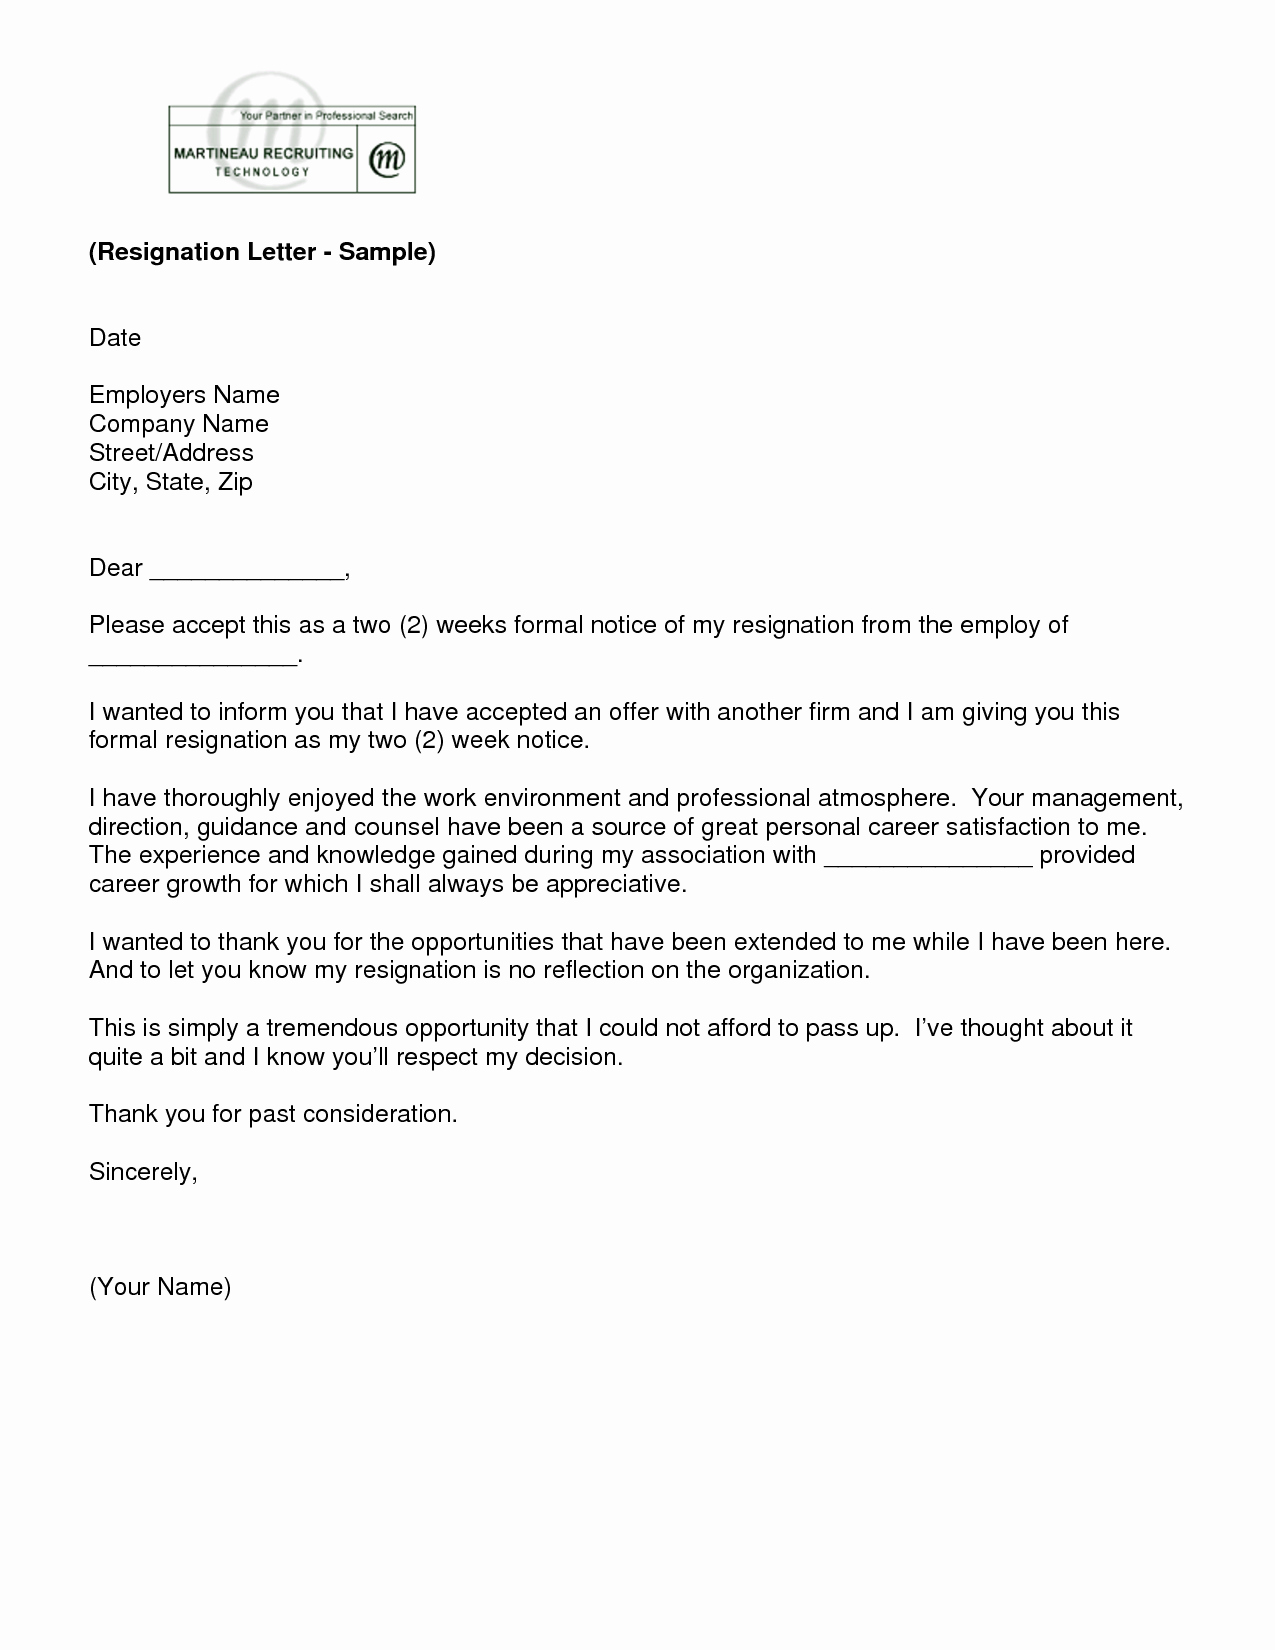 Resignation Letter 2 Week Notice Inspirational Letter Of Resignation 2 Weeks Notice Template